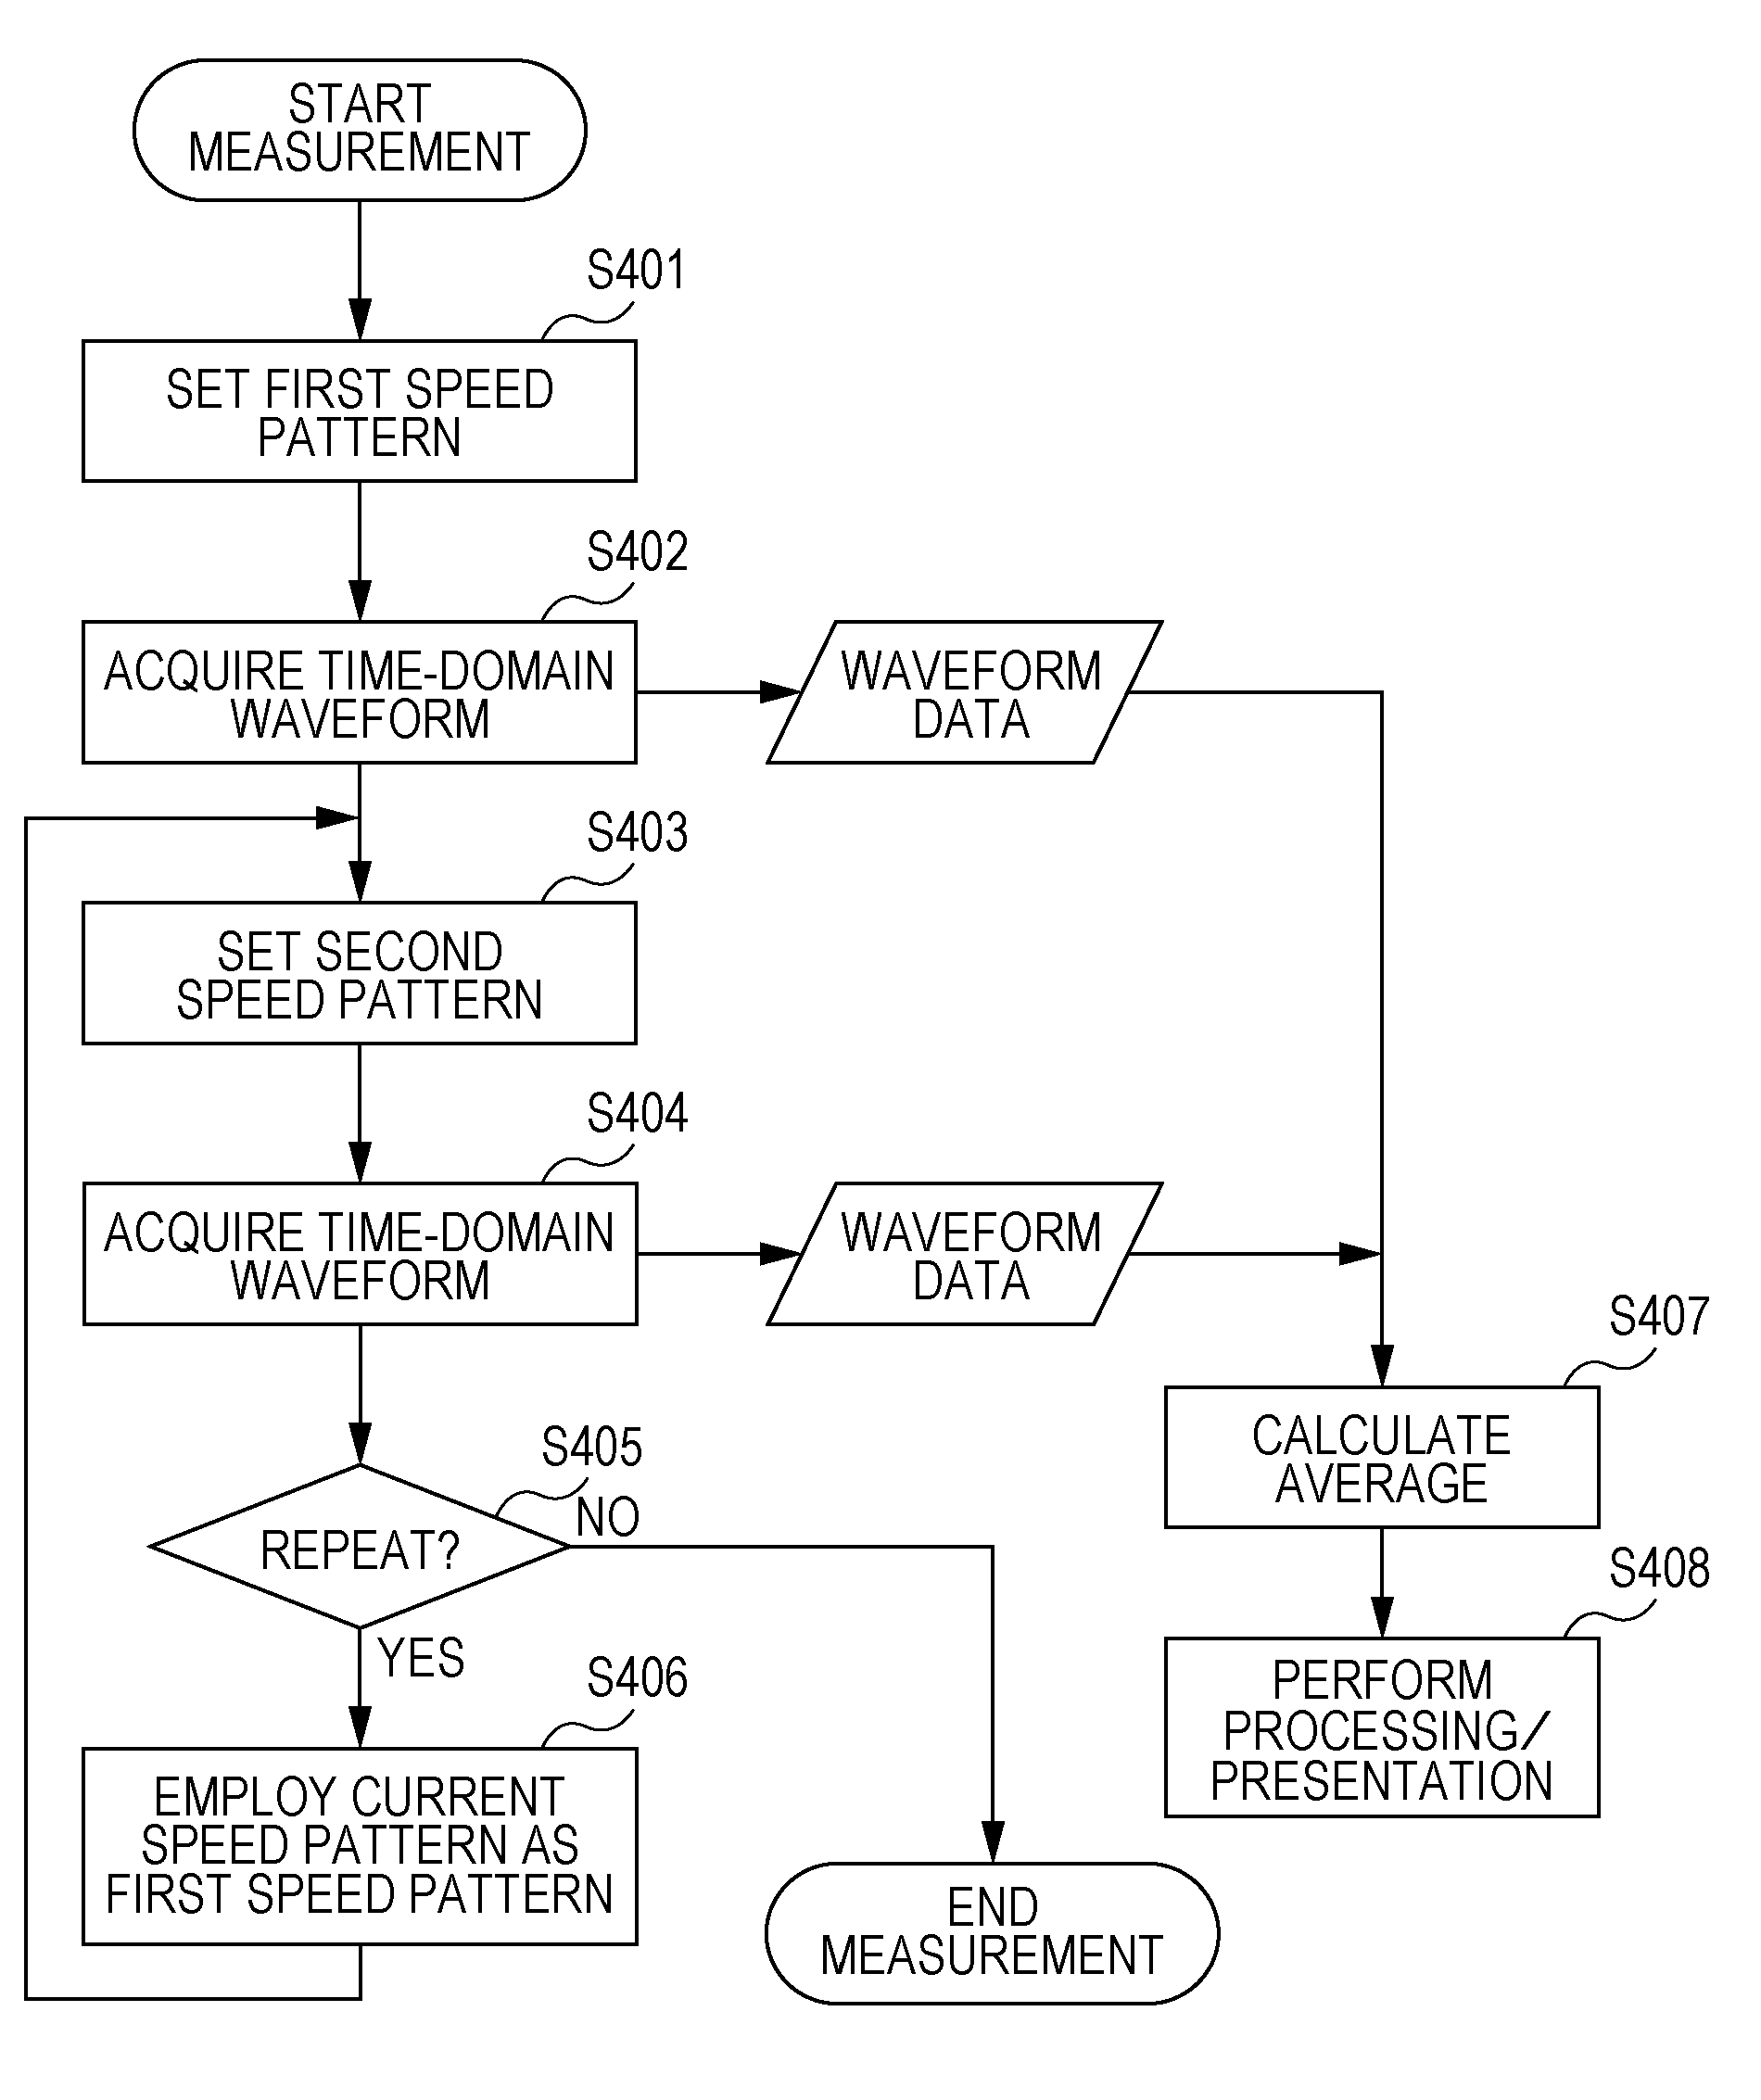 Apparatus and method of measuring terahertz wave